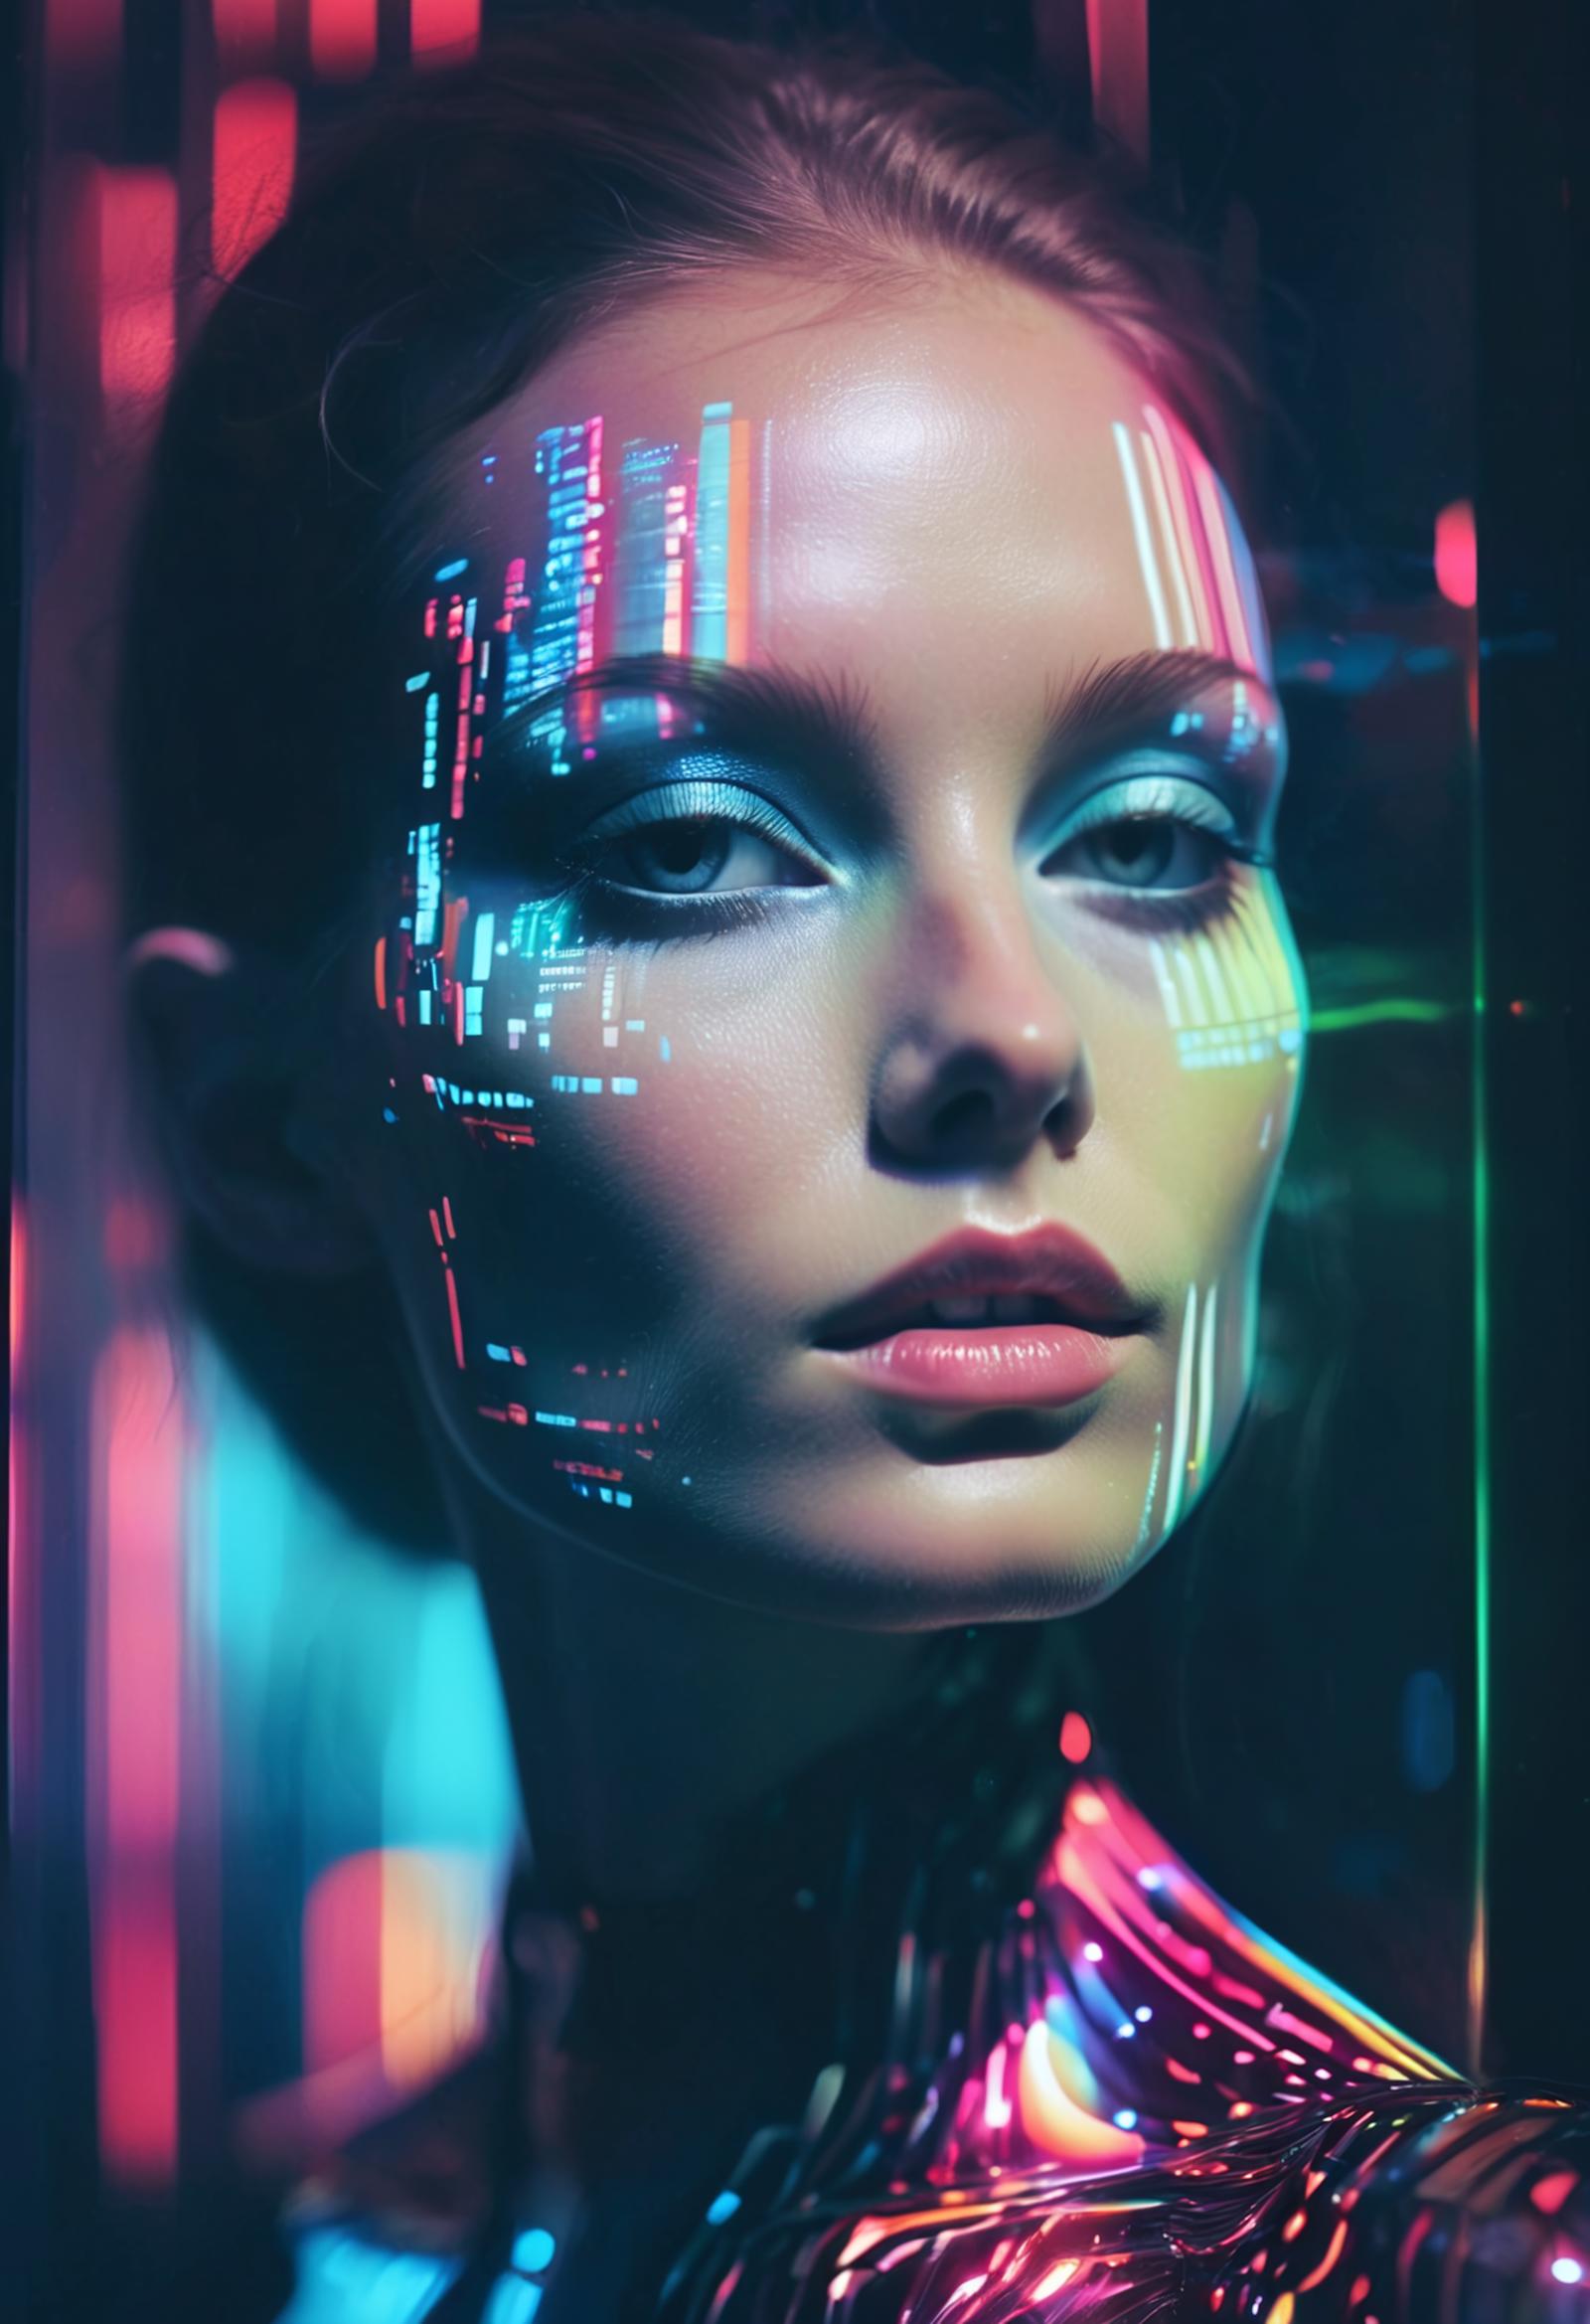 AI model image by FrenzyX